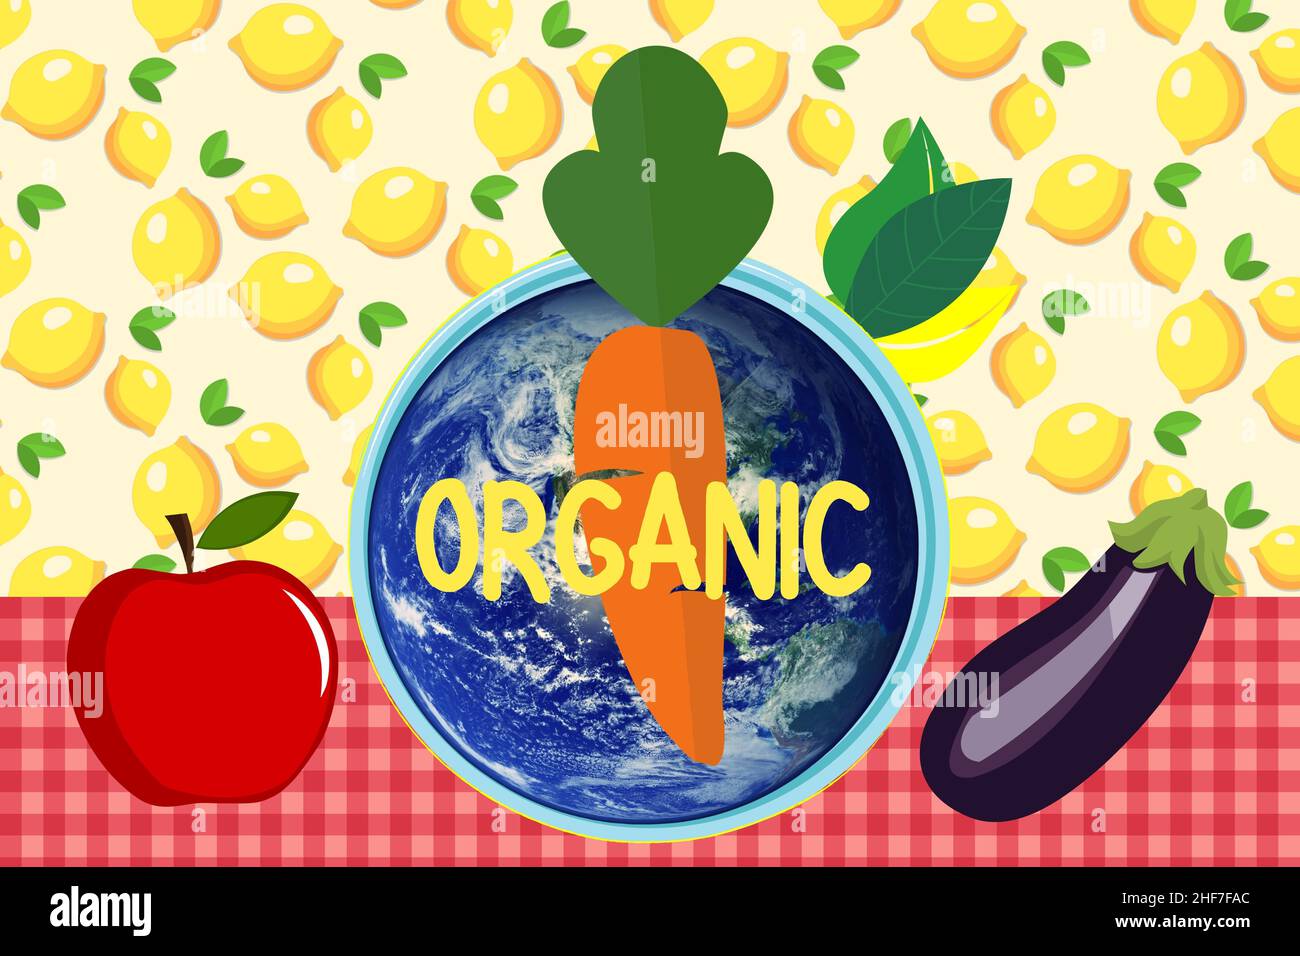 Organic food creative illustration Stock Photo